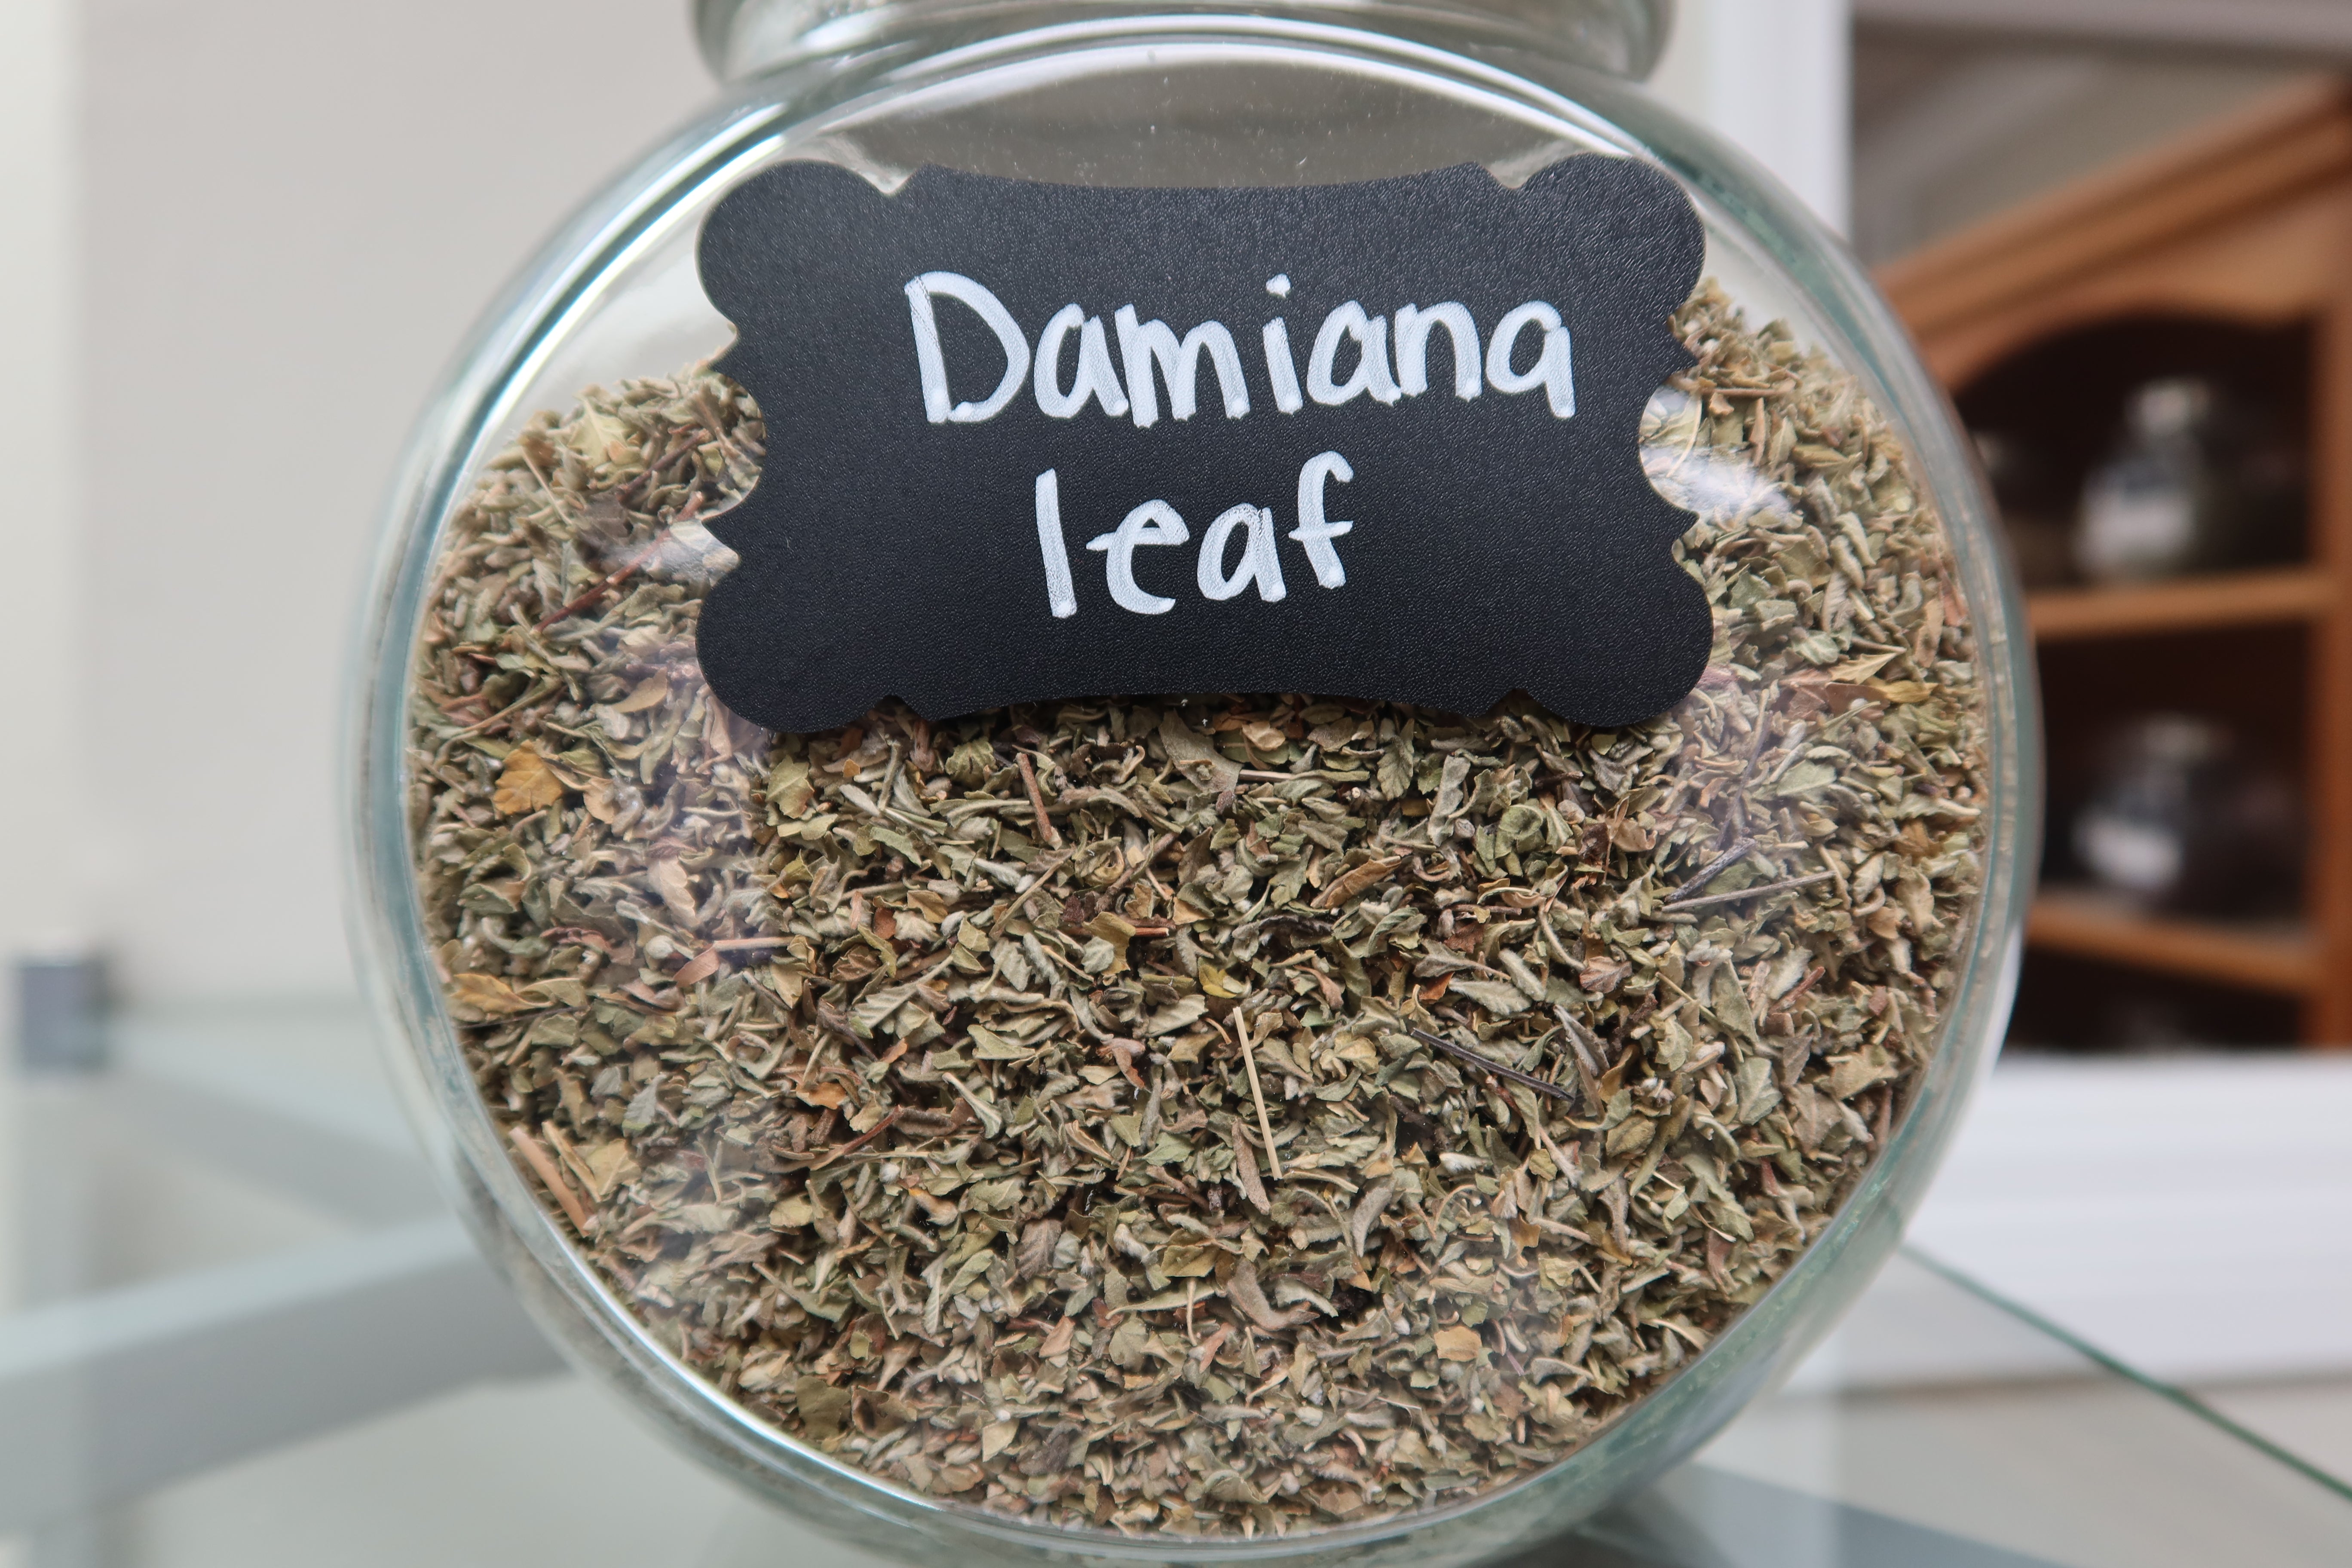 Damiana leaf